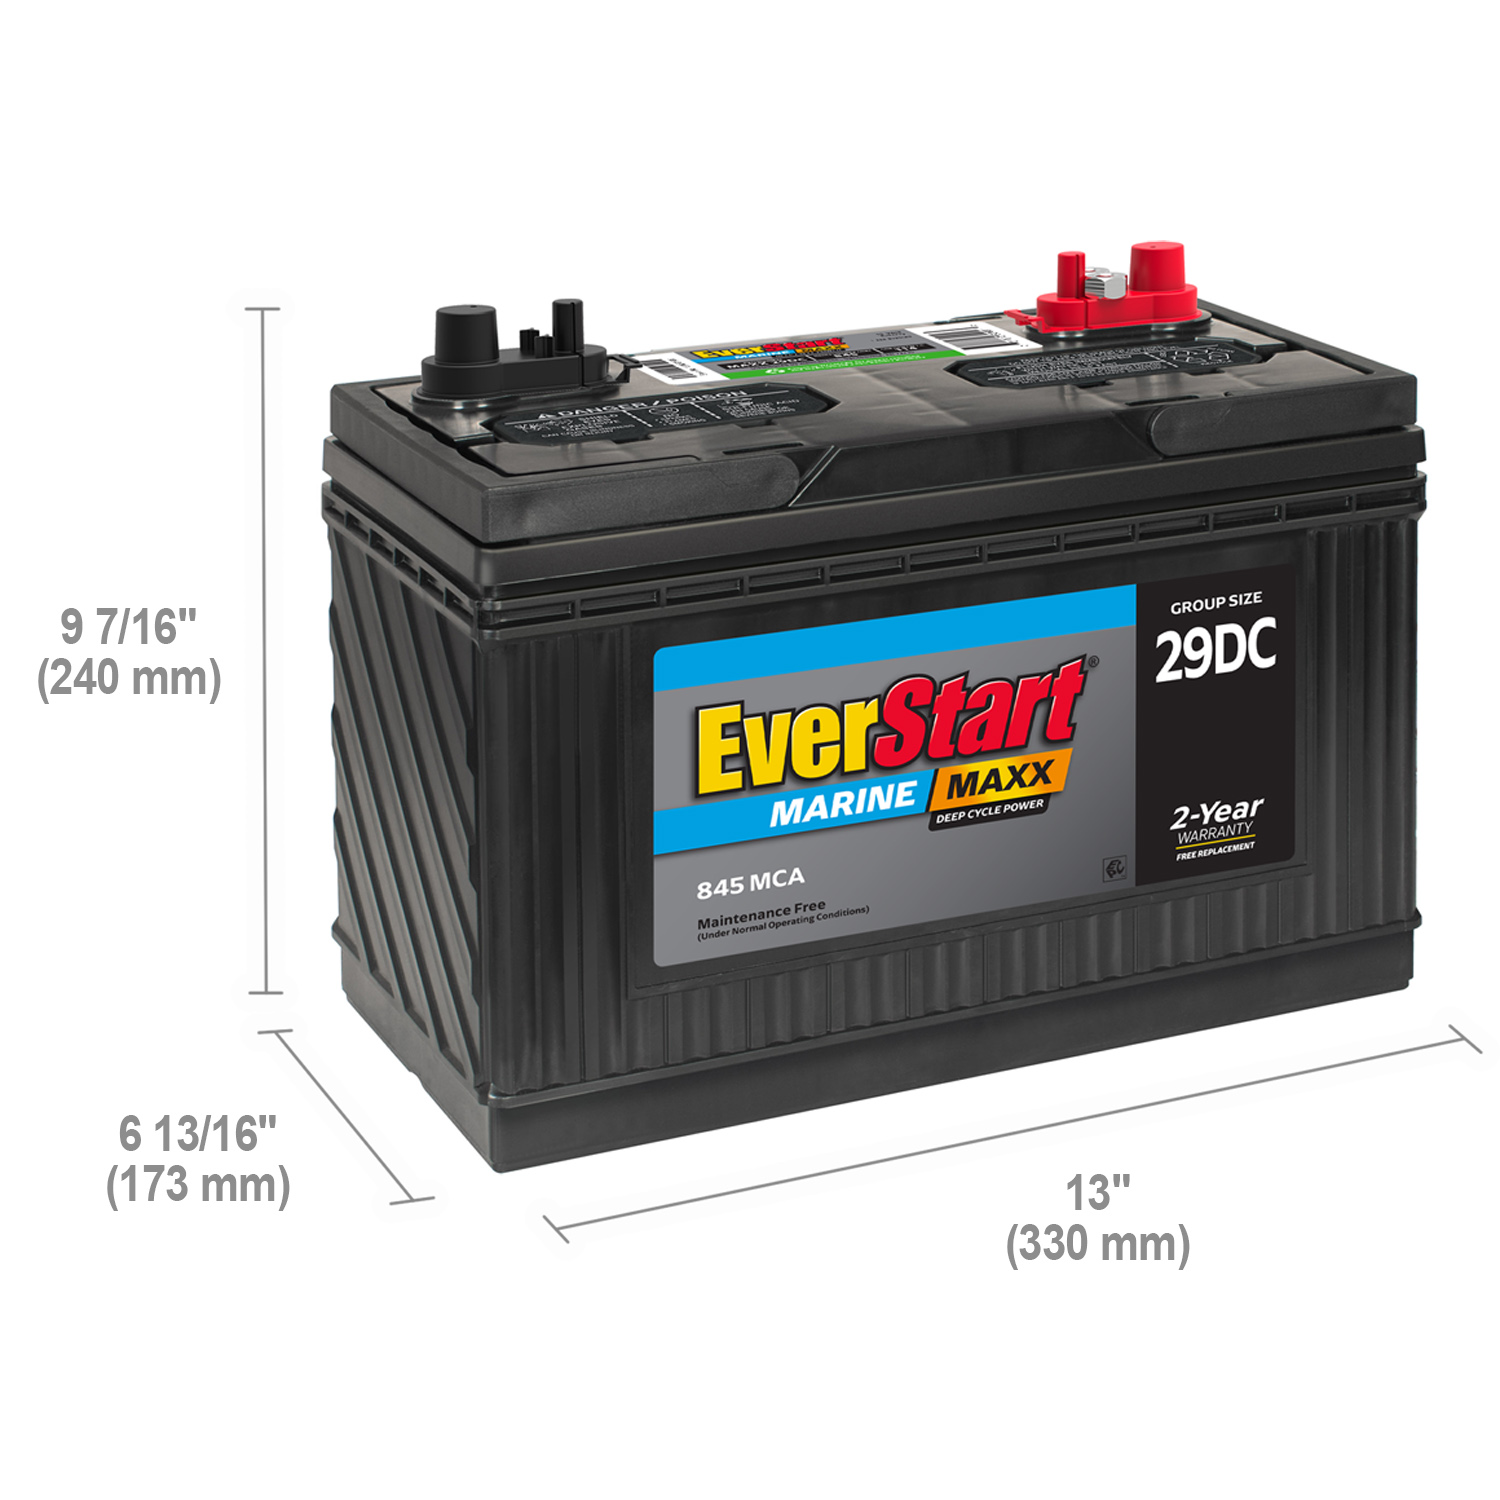 EverStart Maxx Marine Battery, Group Size 29DC 12 Volt, 845 CCA - image 2 of 7